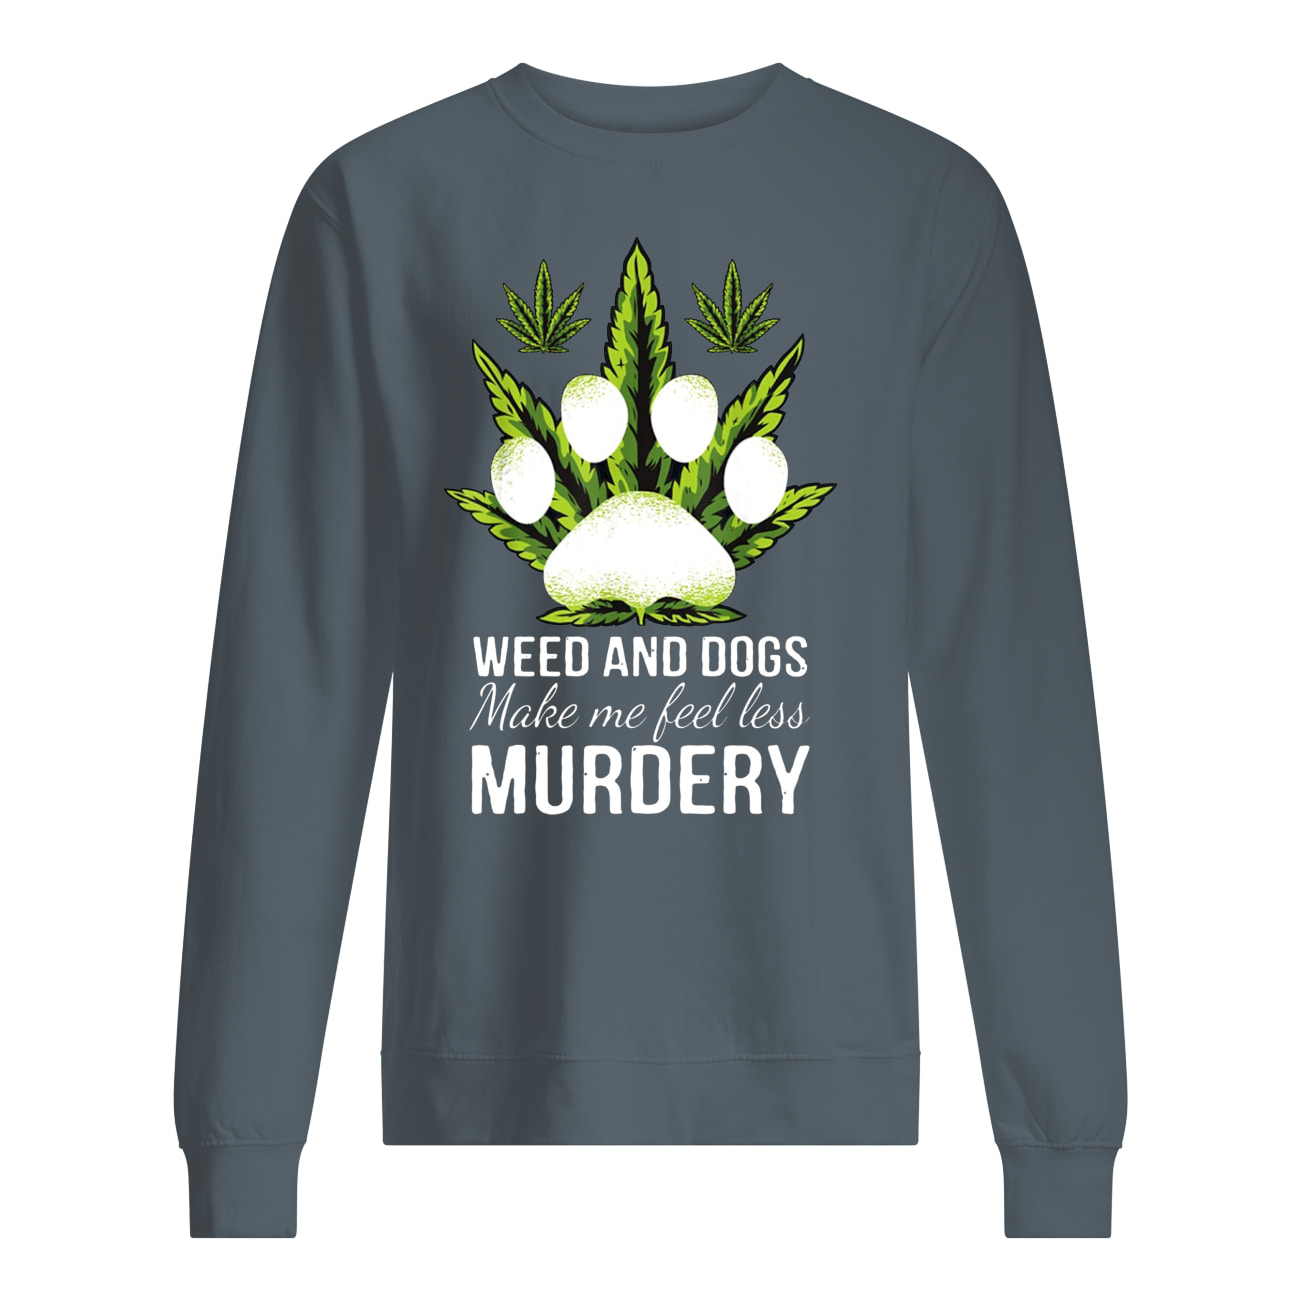 Weed and dogs make me feel less murdery sweatshirt